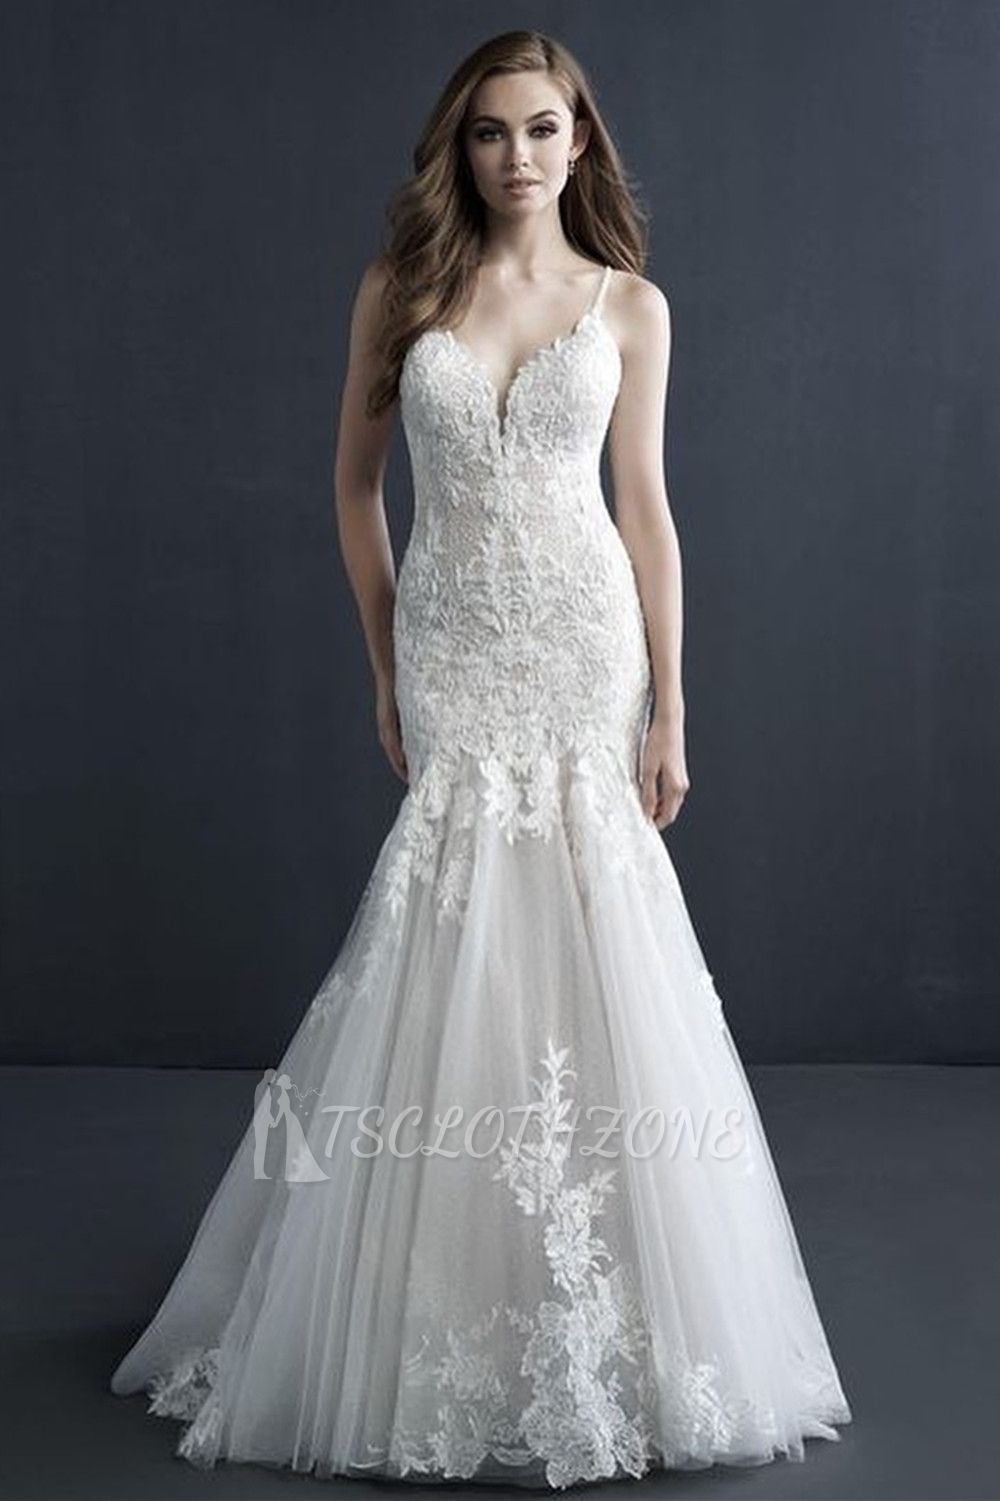 Elegant Sleeveless White Lace Mermaid Wedding Gown Sweetheart Tulle Appliques Bridal Dress